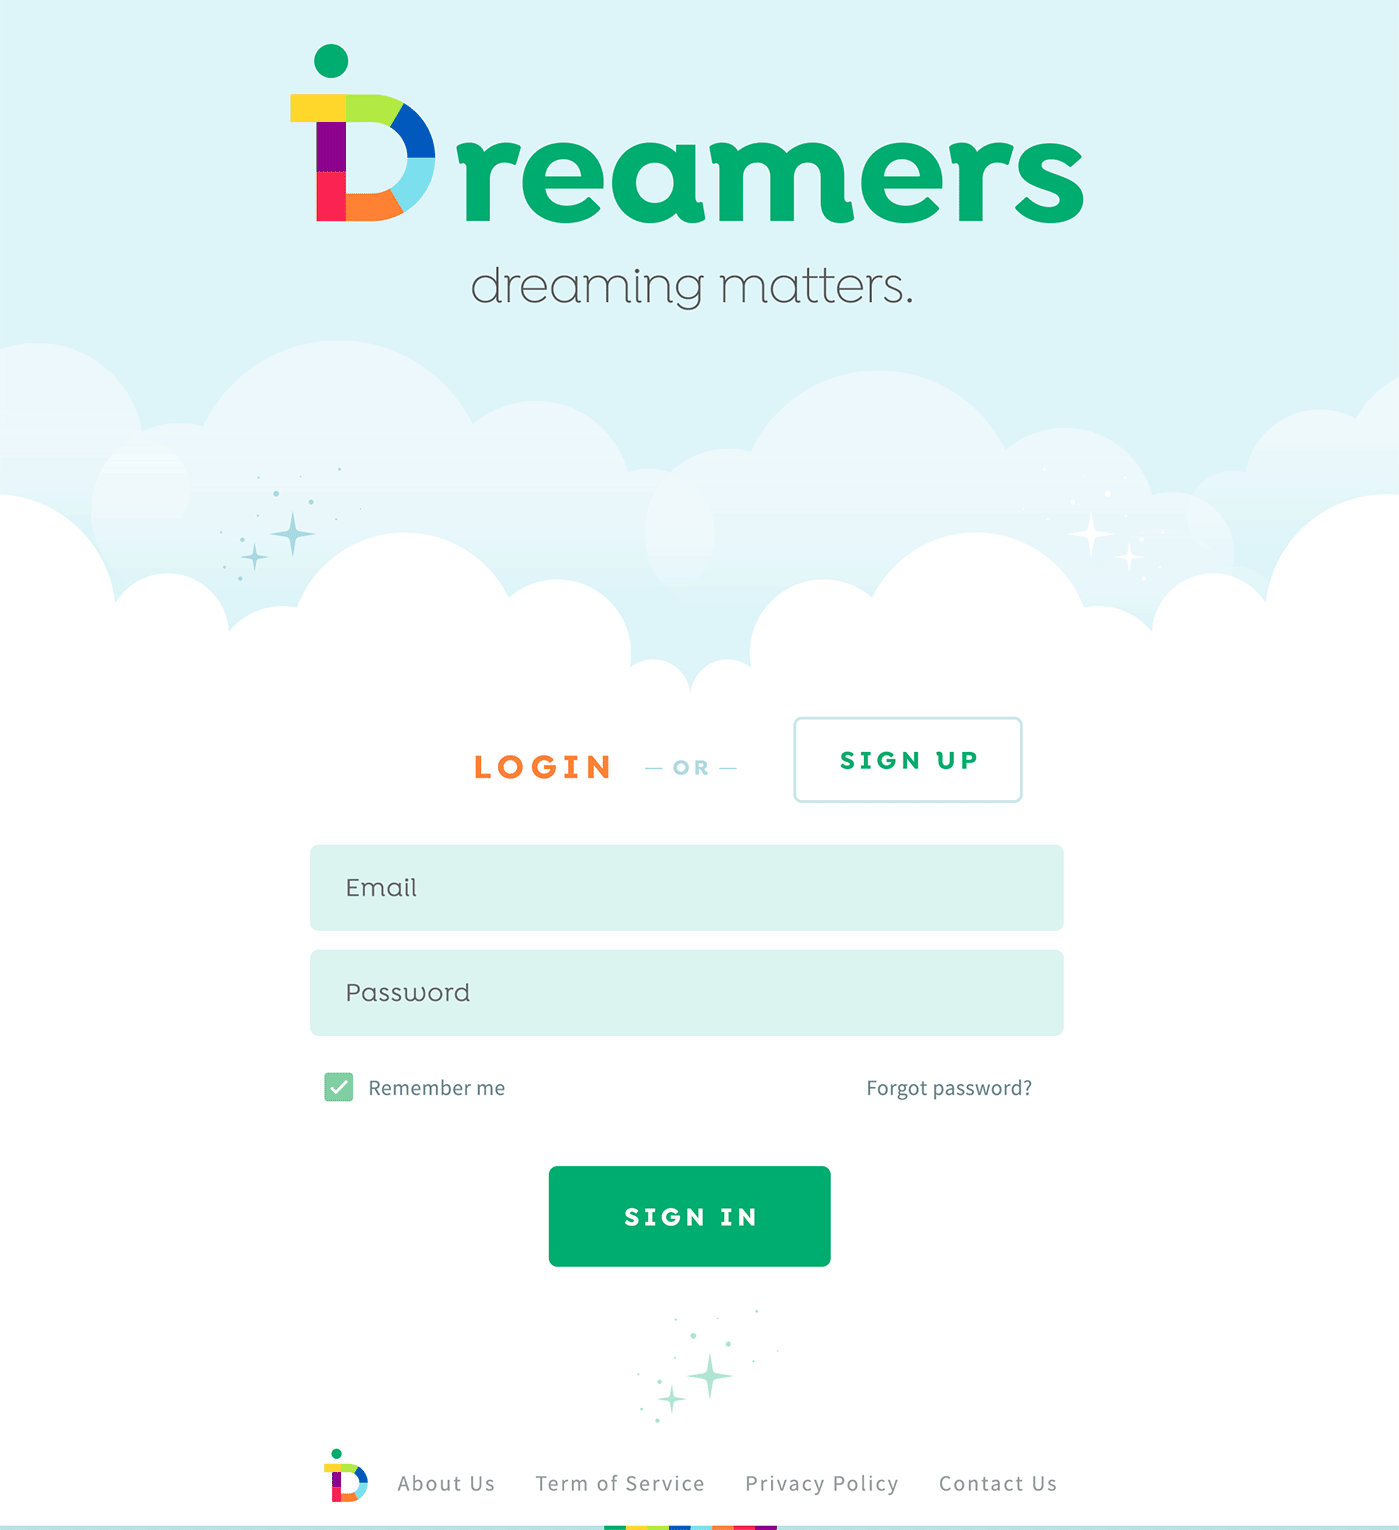 iDreamers web site landing (login / sign up) page design